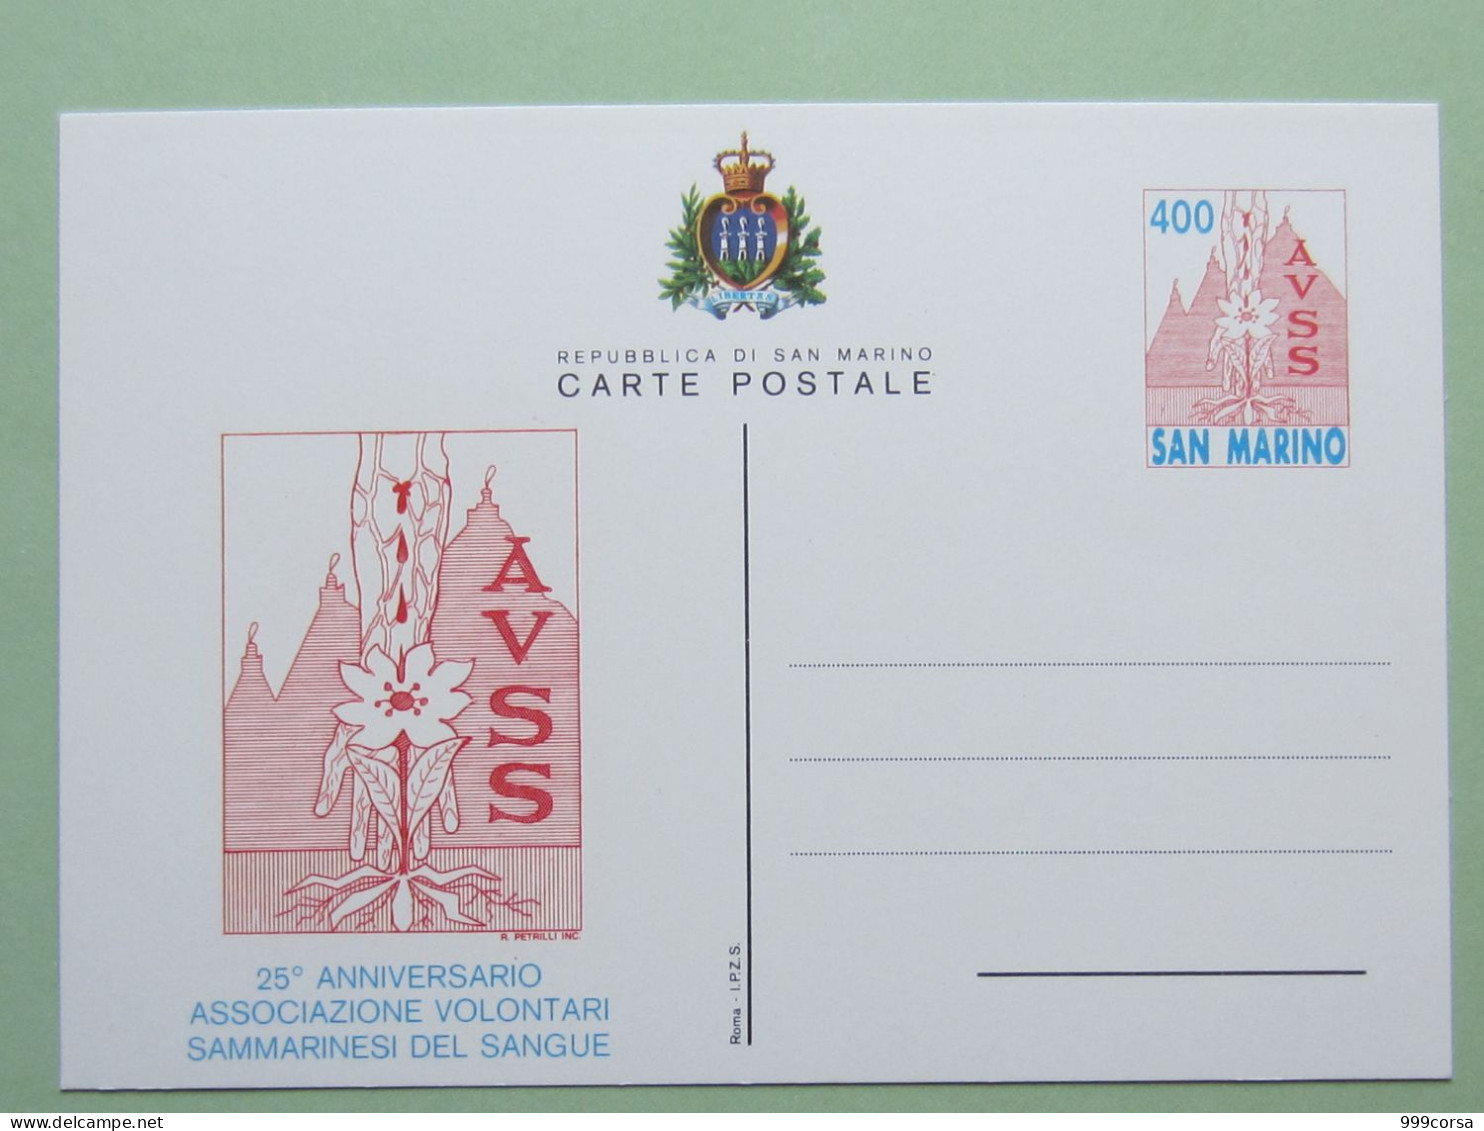 San Marino,lotto Interi Postali (busta Asiago Arte Filatelica,cart.post.Alfa Romeo 75°ann.,aerogramma Olimphilex 1985,ec - Interi Postali